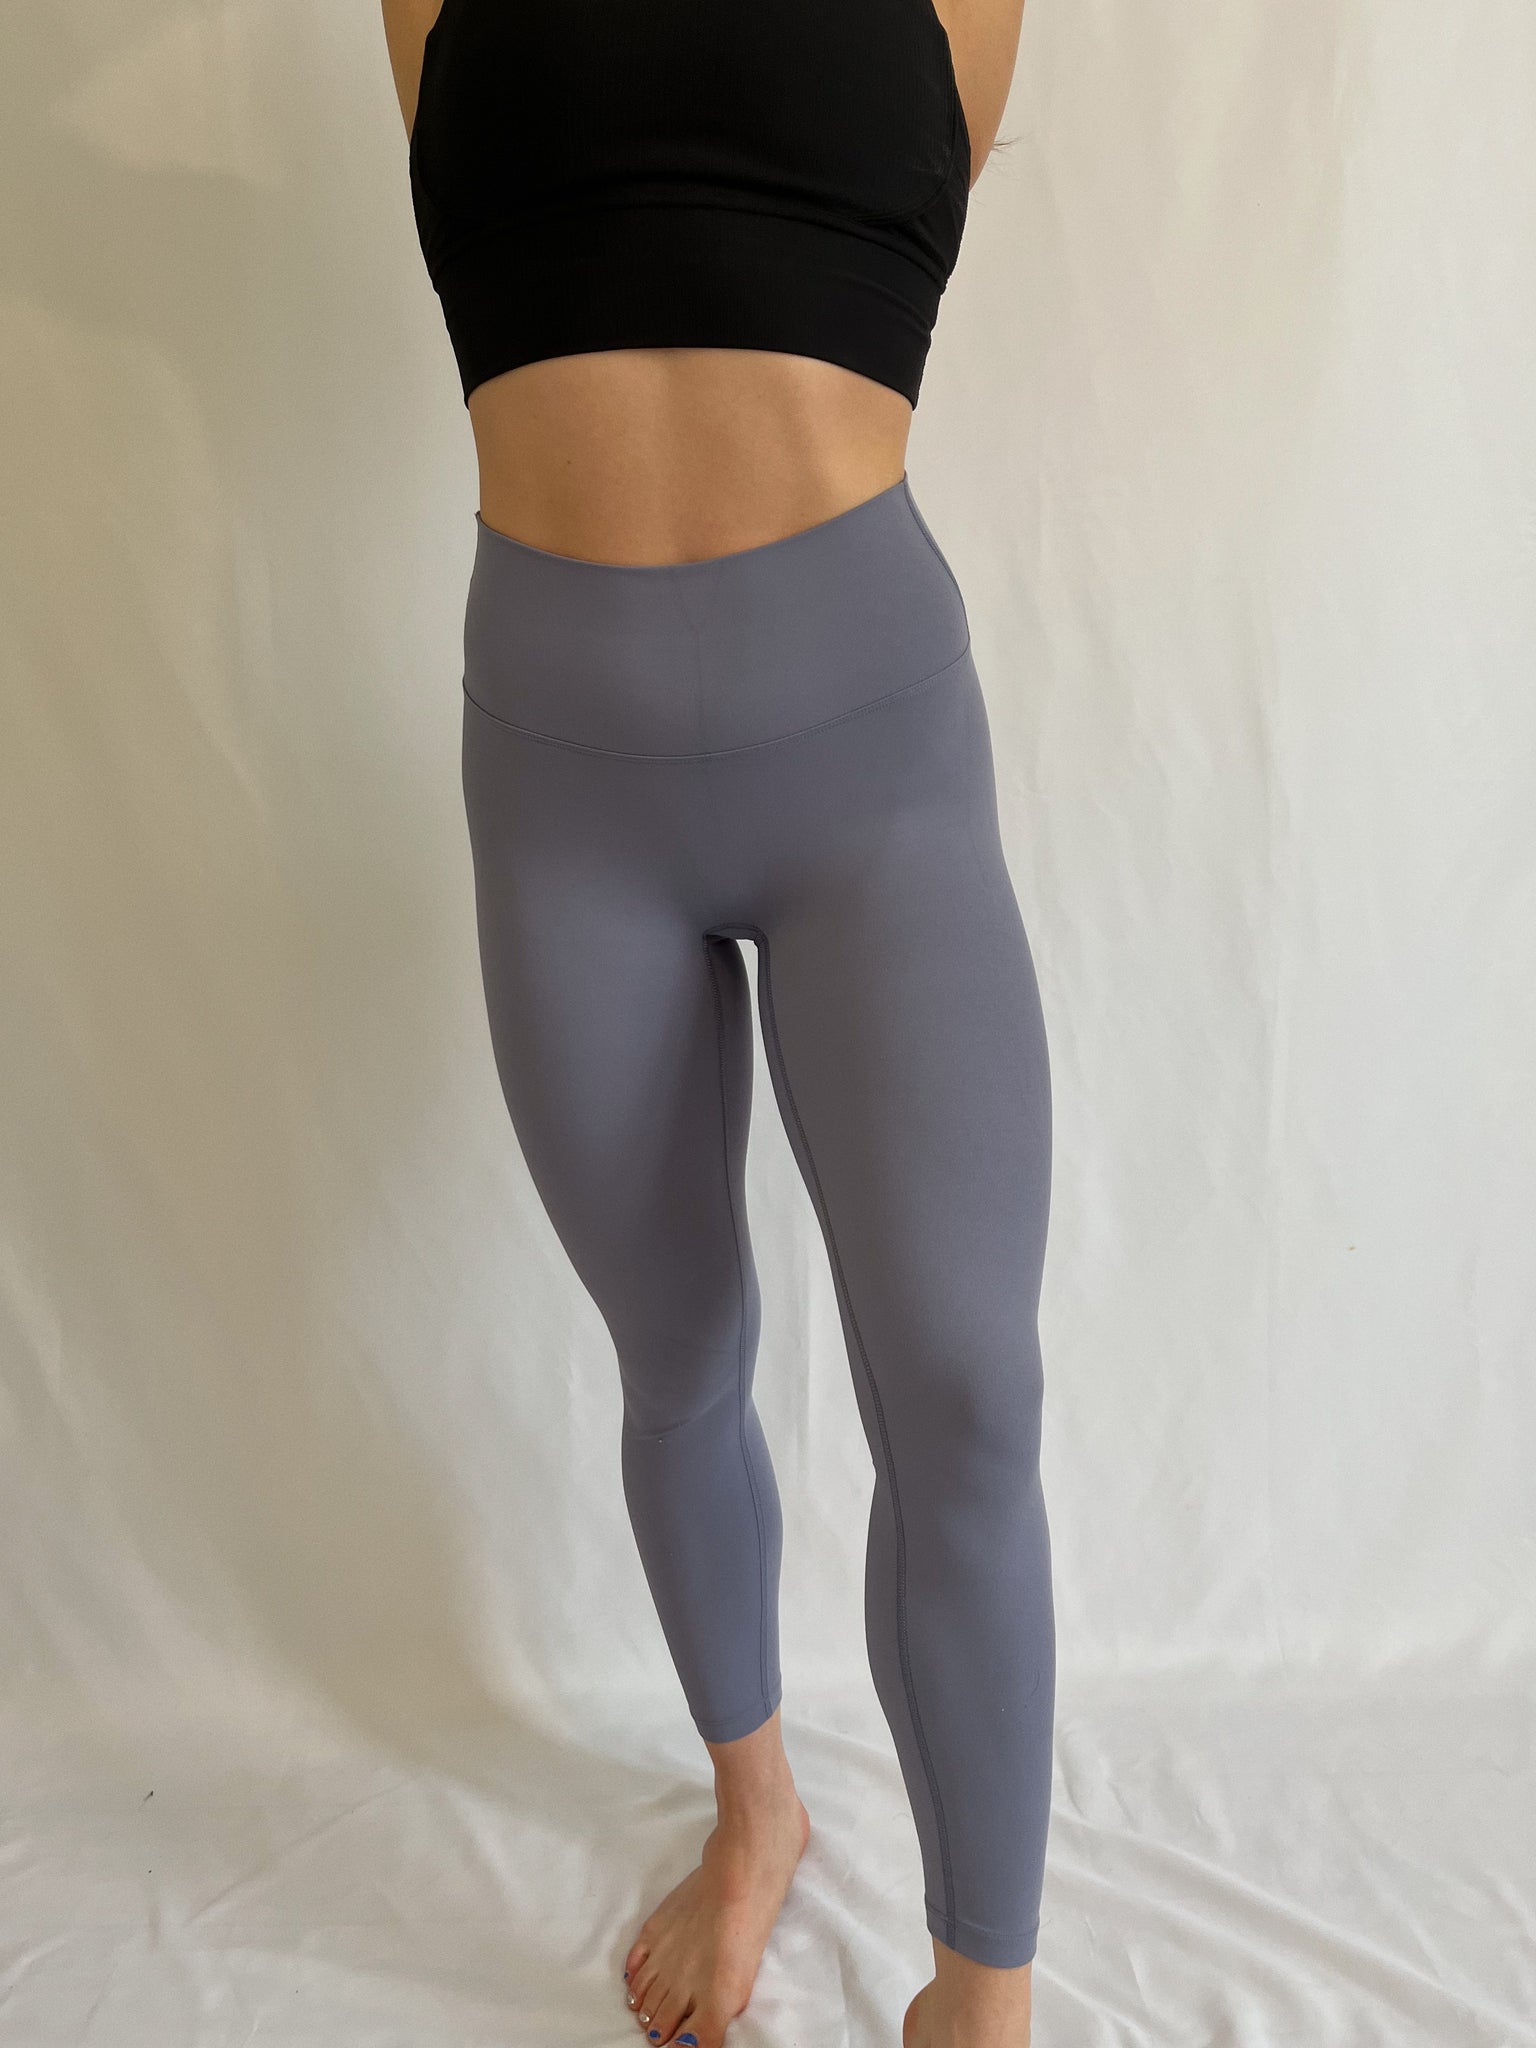 prAna Kimble Printed 7/8 Legging - Women's, Chalkboard Tiles, Medium,  W41202023-CBTL-M — Womens Clothing Size: Medium, Gender: Female, Age Group